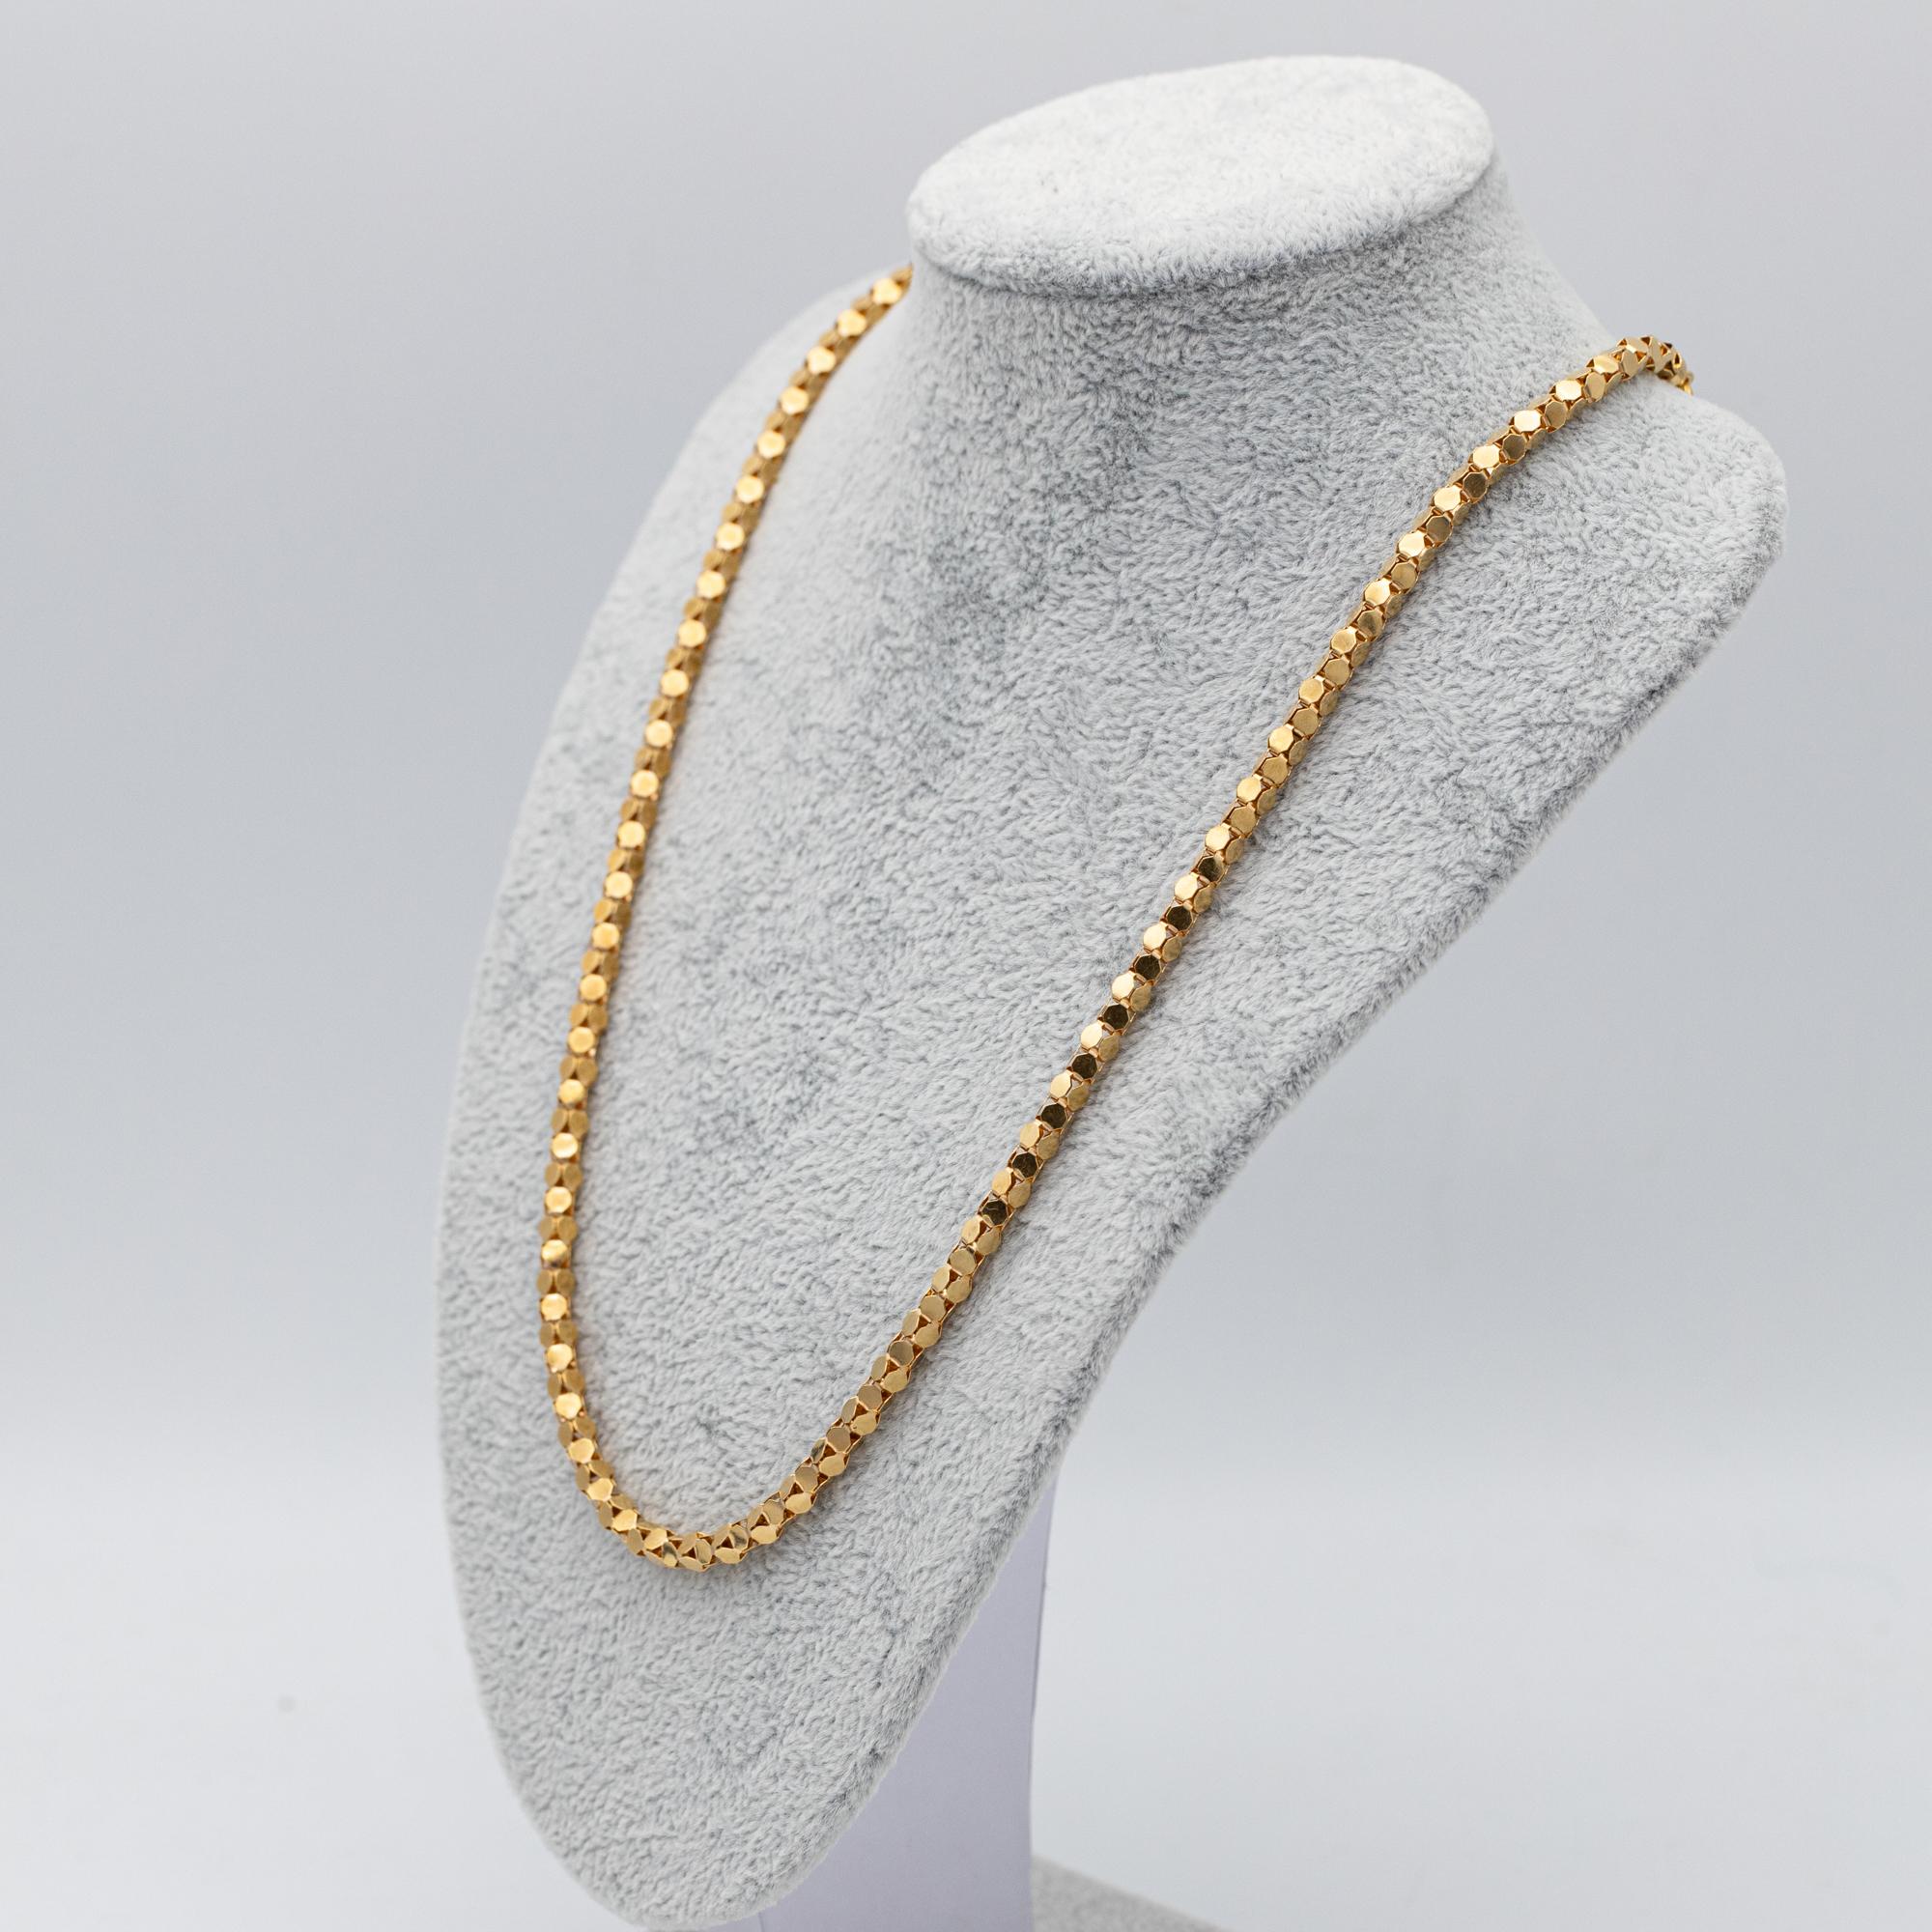 18k solid gold Retro popcorn chain - Italian 1960's necklace - 63.5 cm - 25 inch For Sale 2